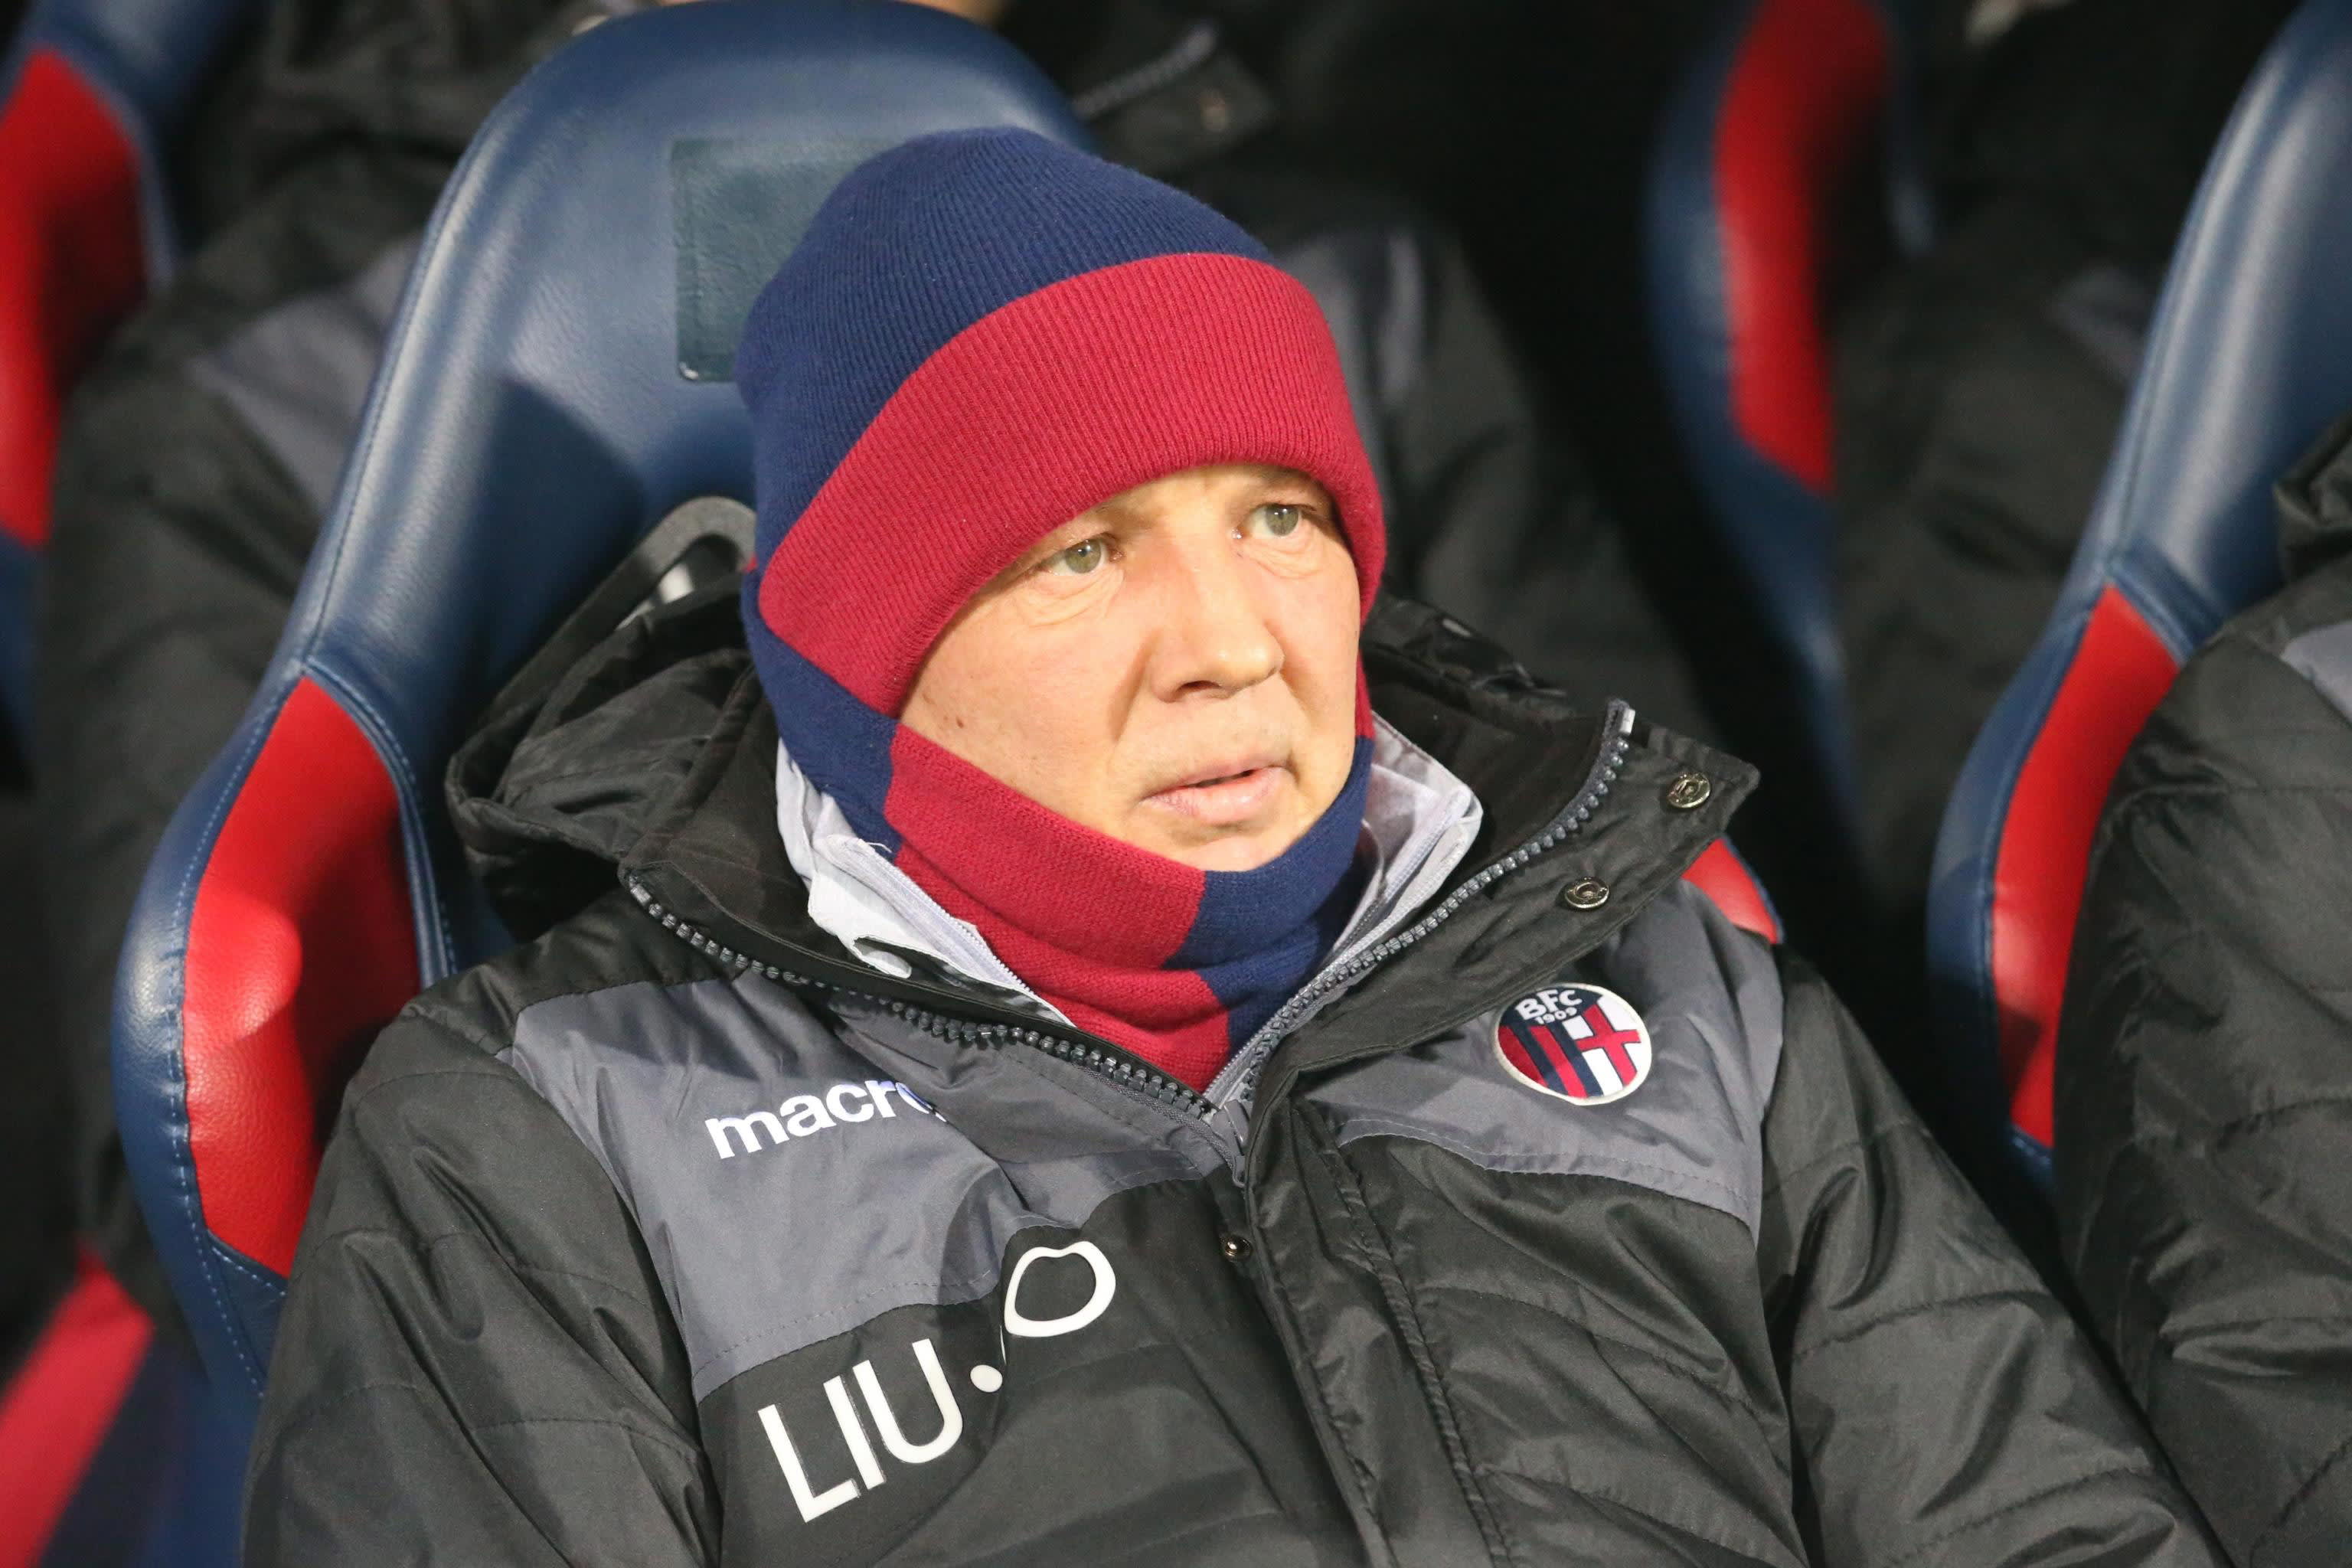 Bologna-coach Mihajlovic na leukemiebehandeling weer thuis